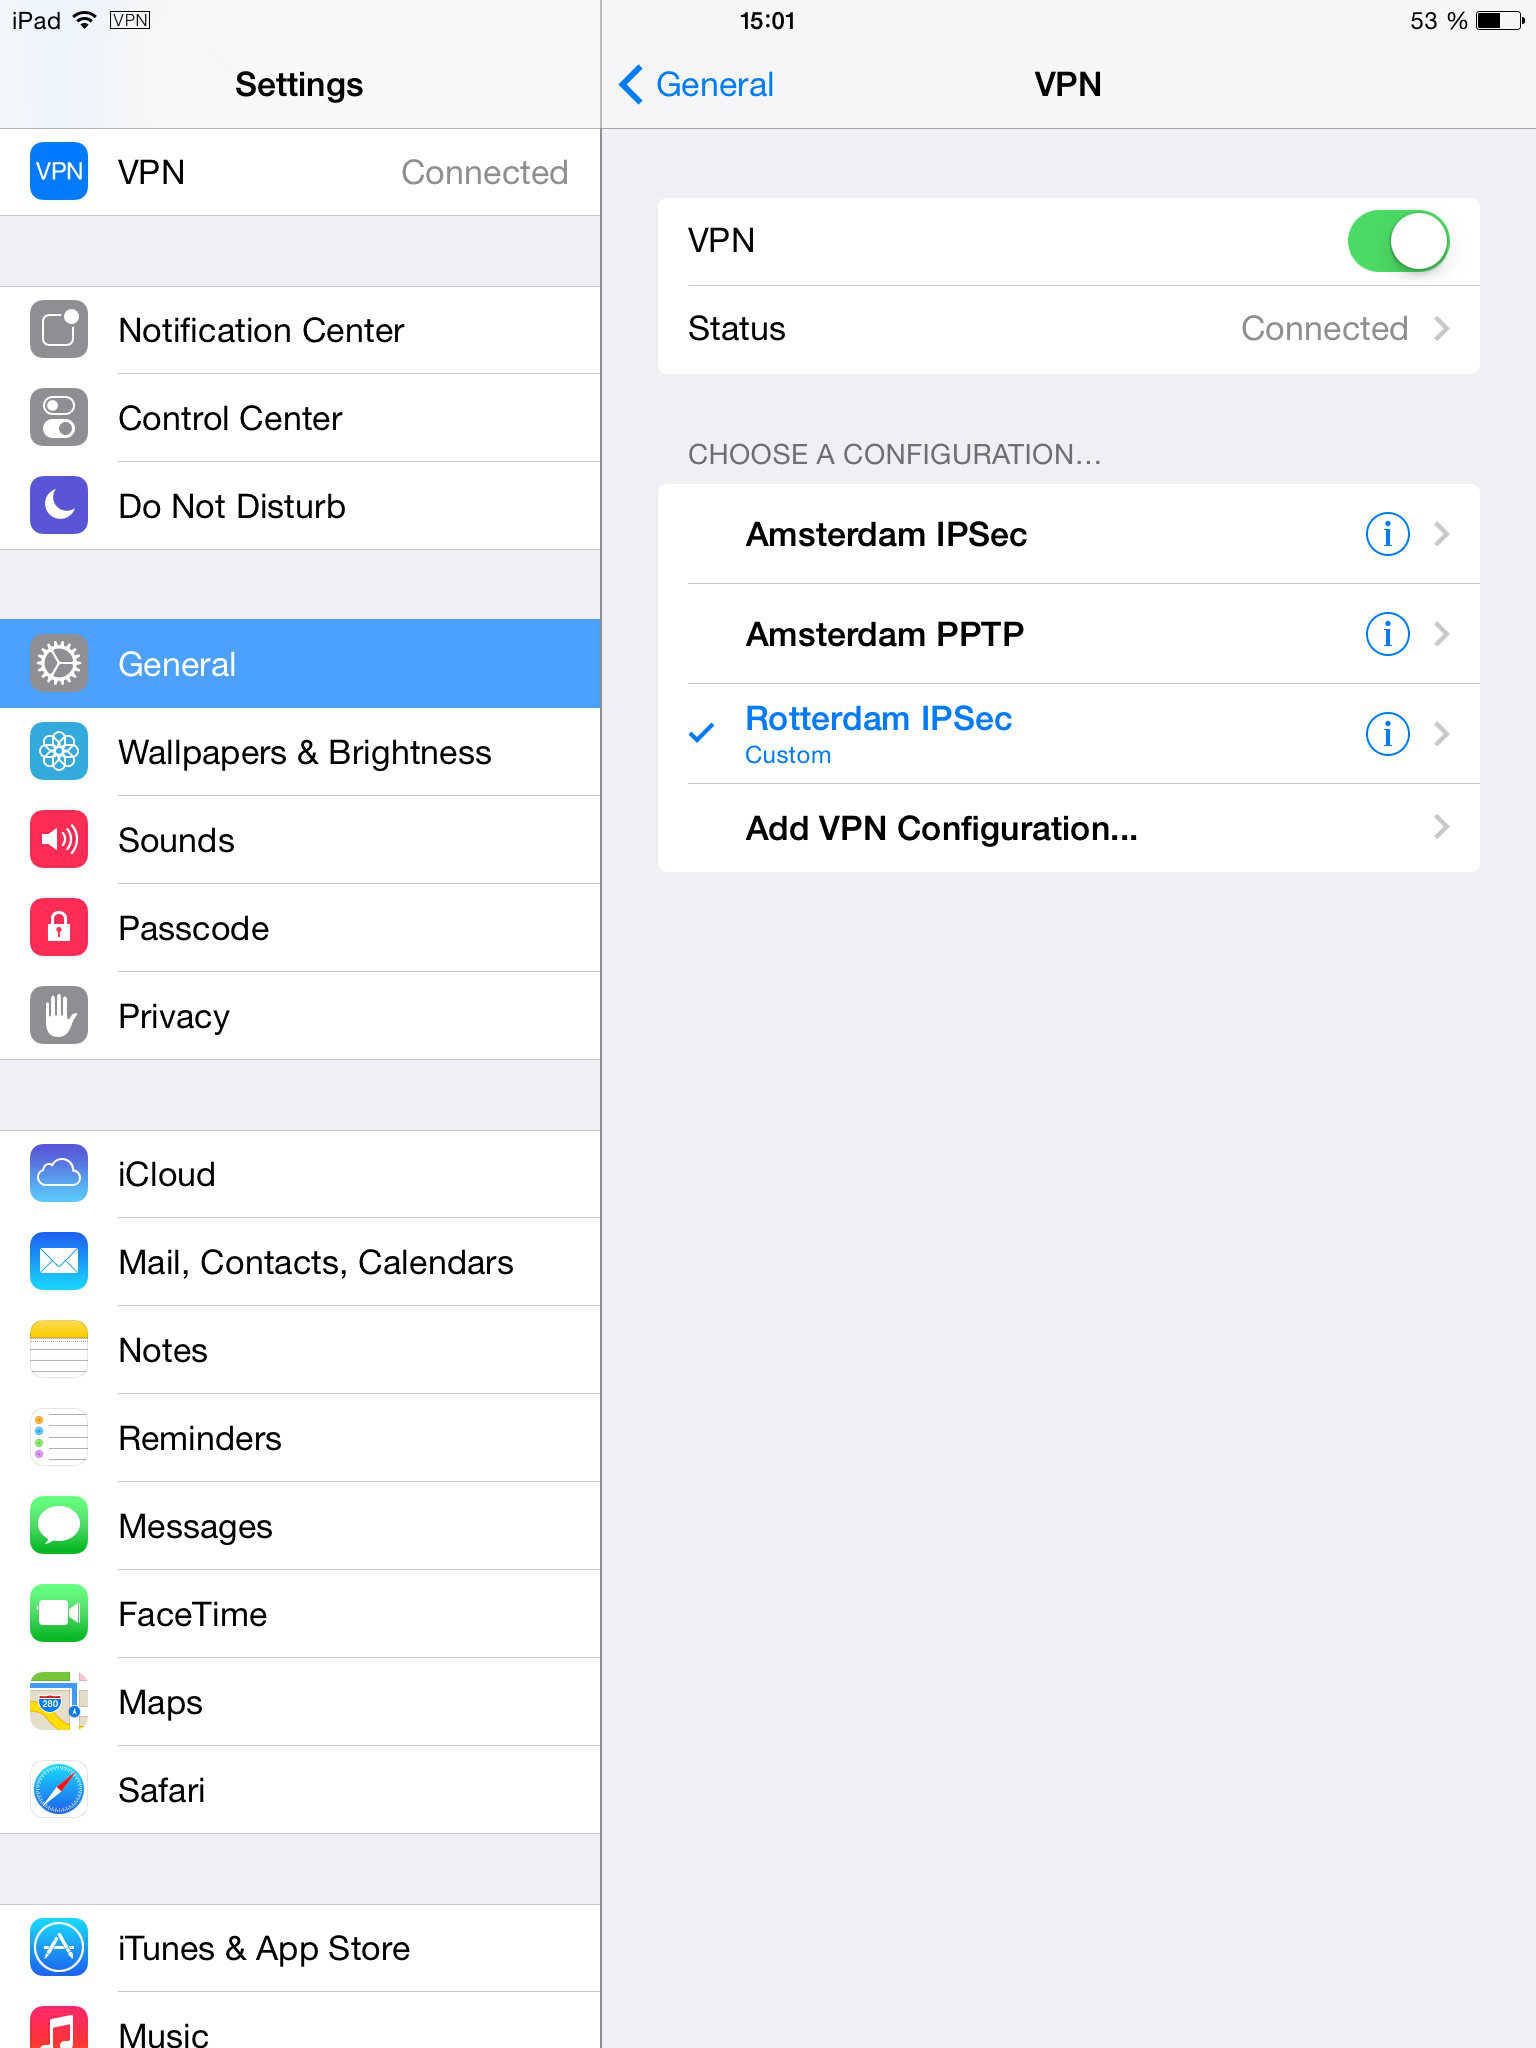 iPad (iOS) general settings VPN switch | IPsec with iOS